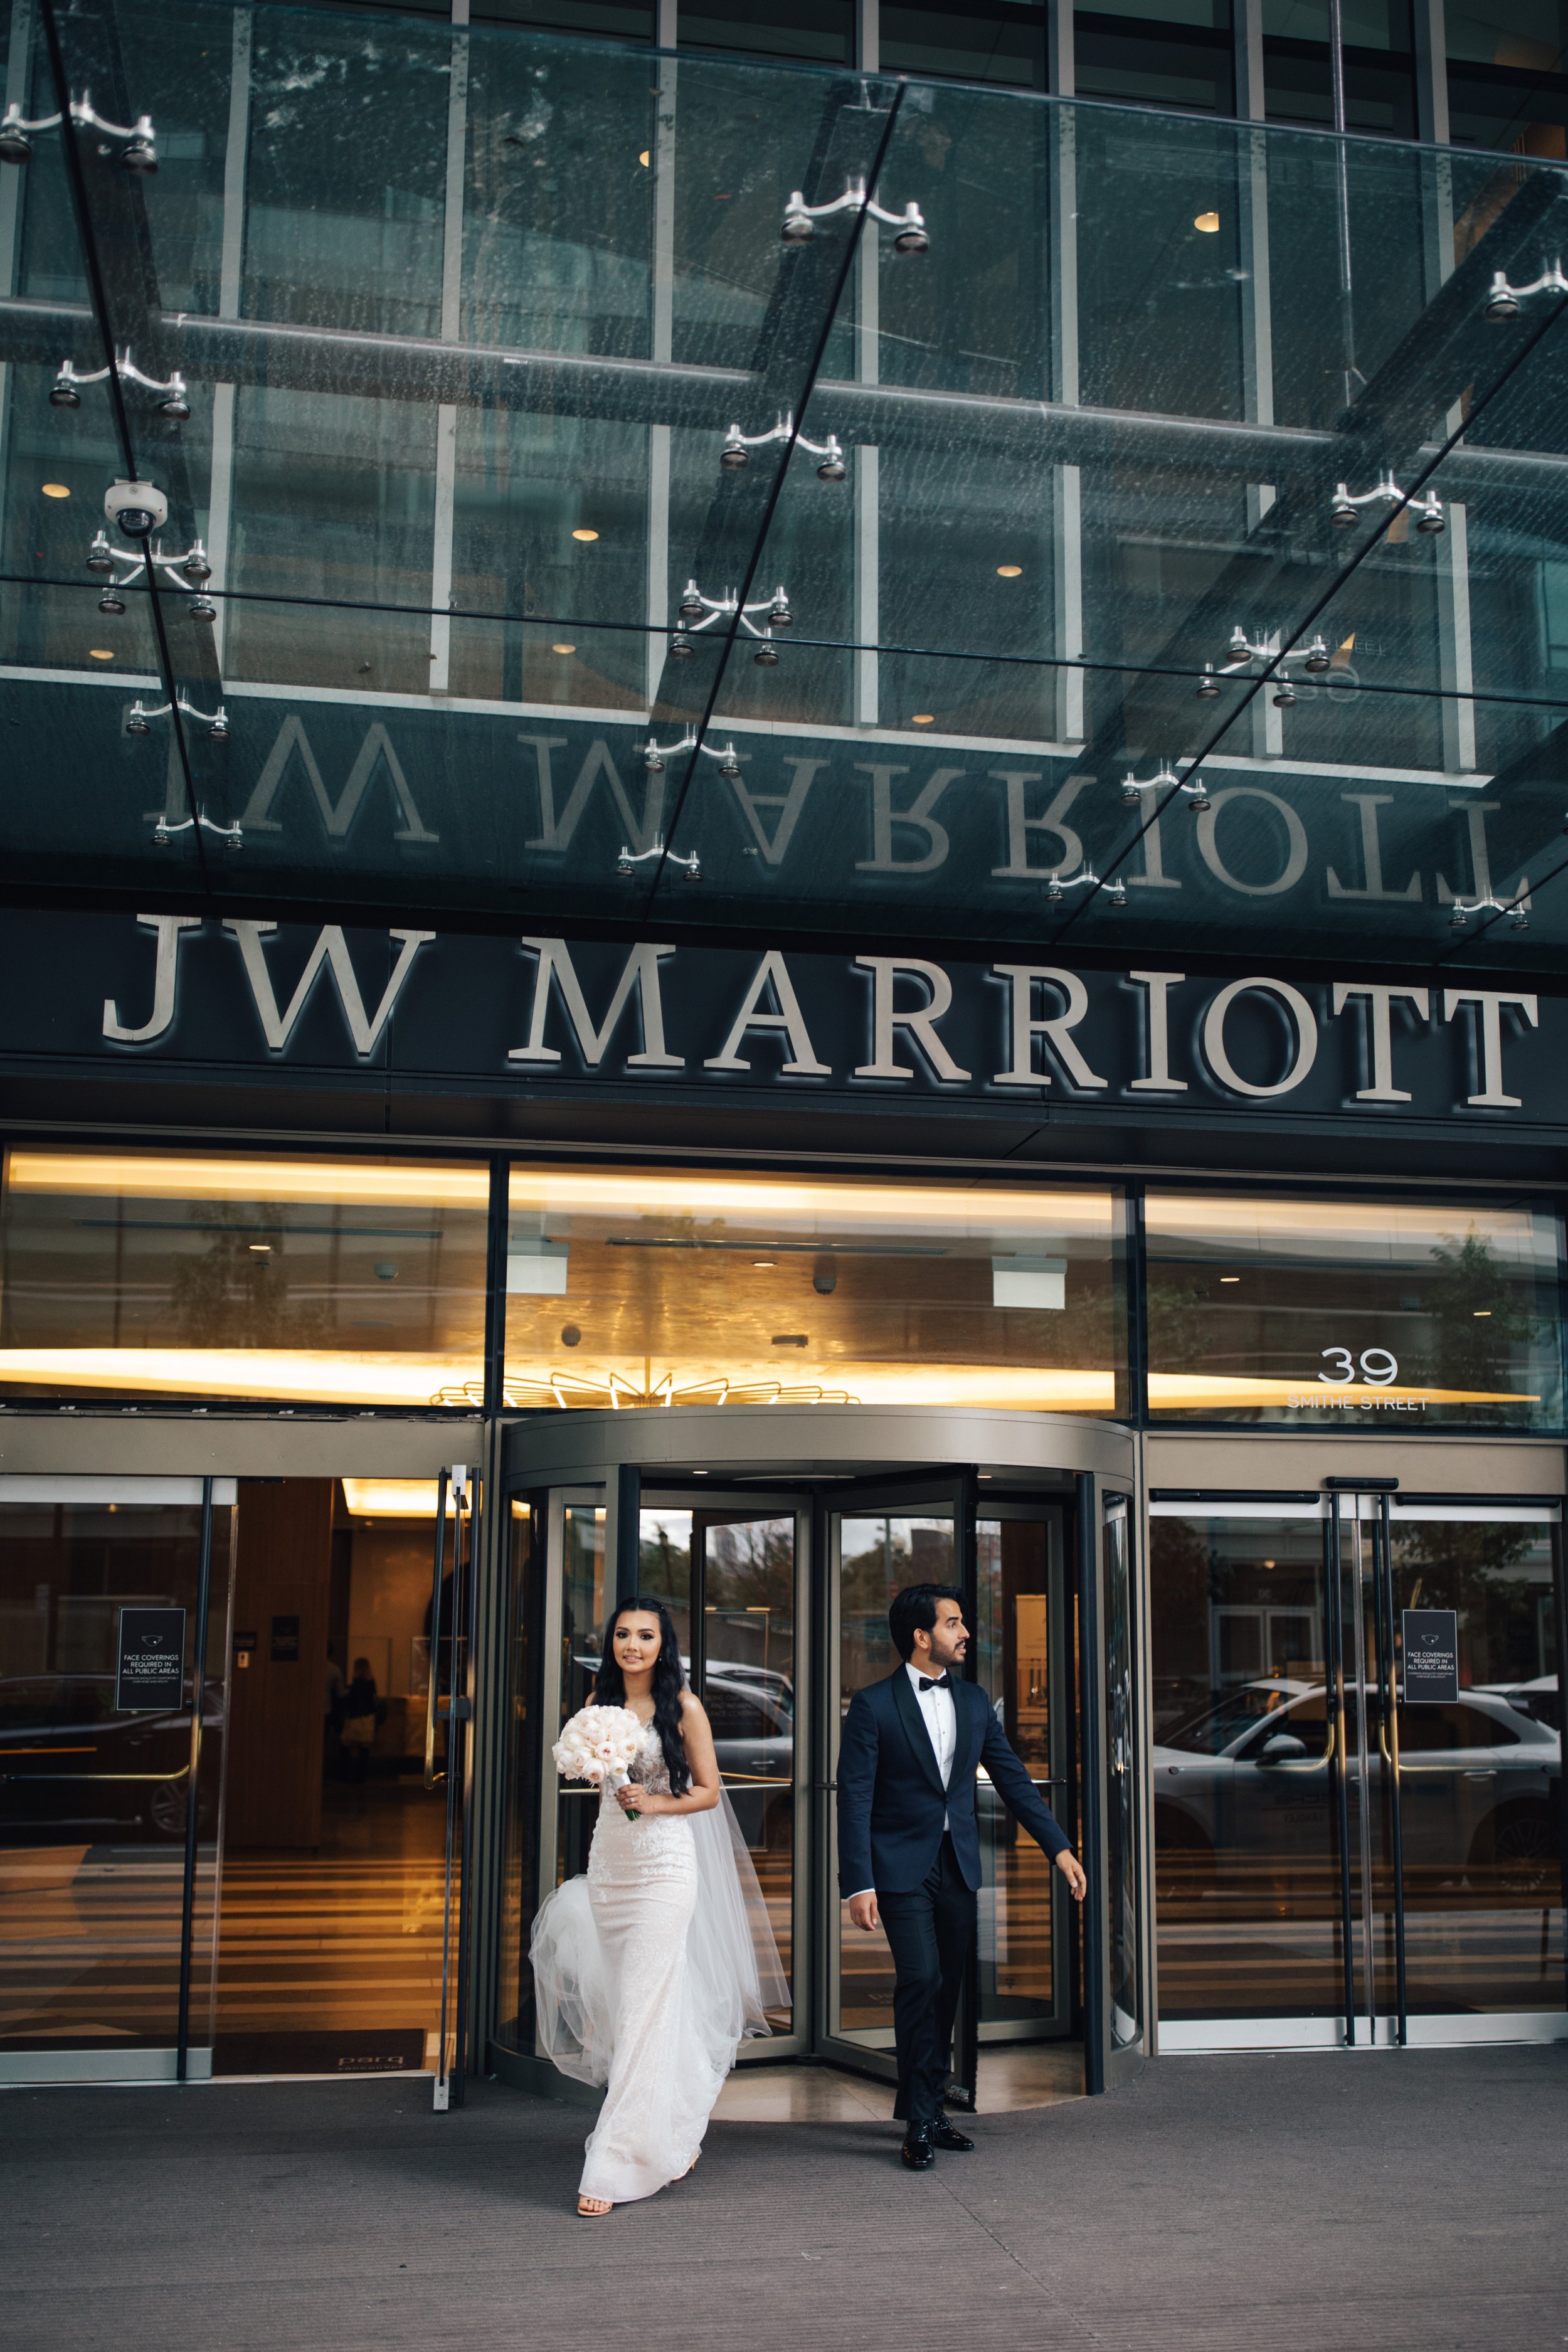 jw marriot hotel photography.jpg